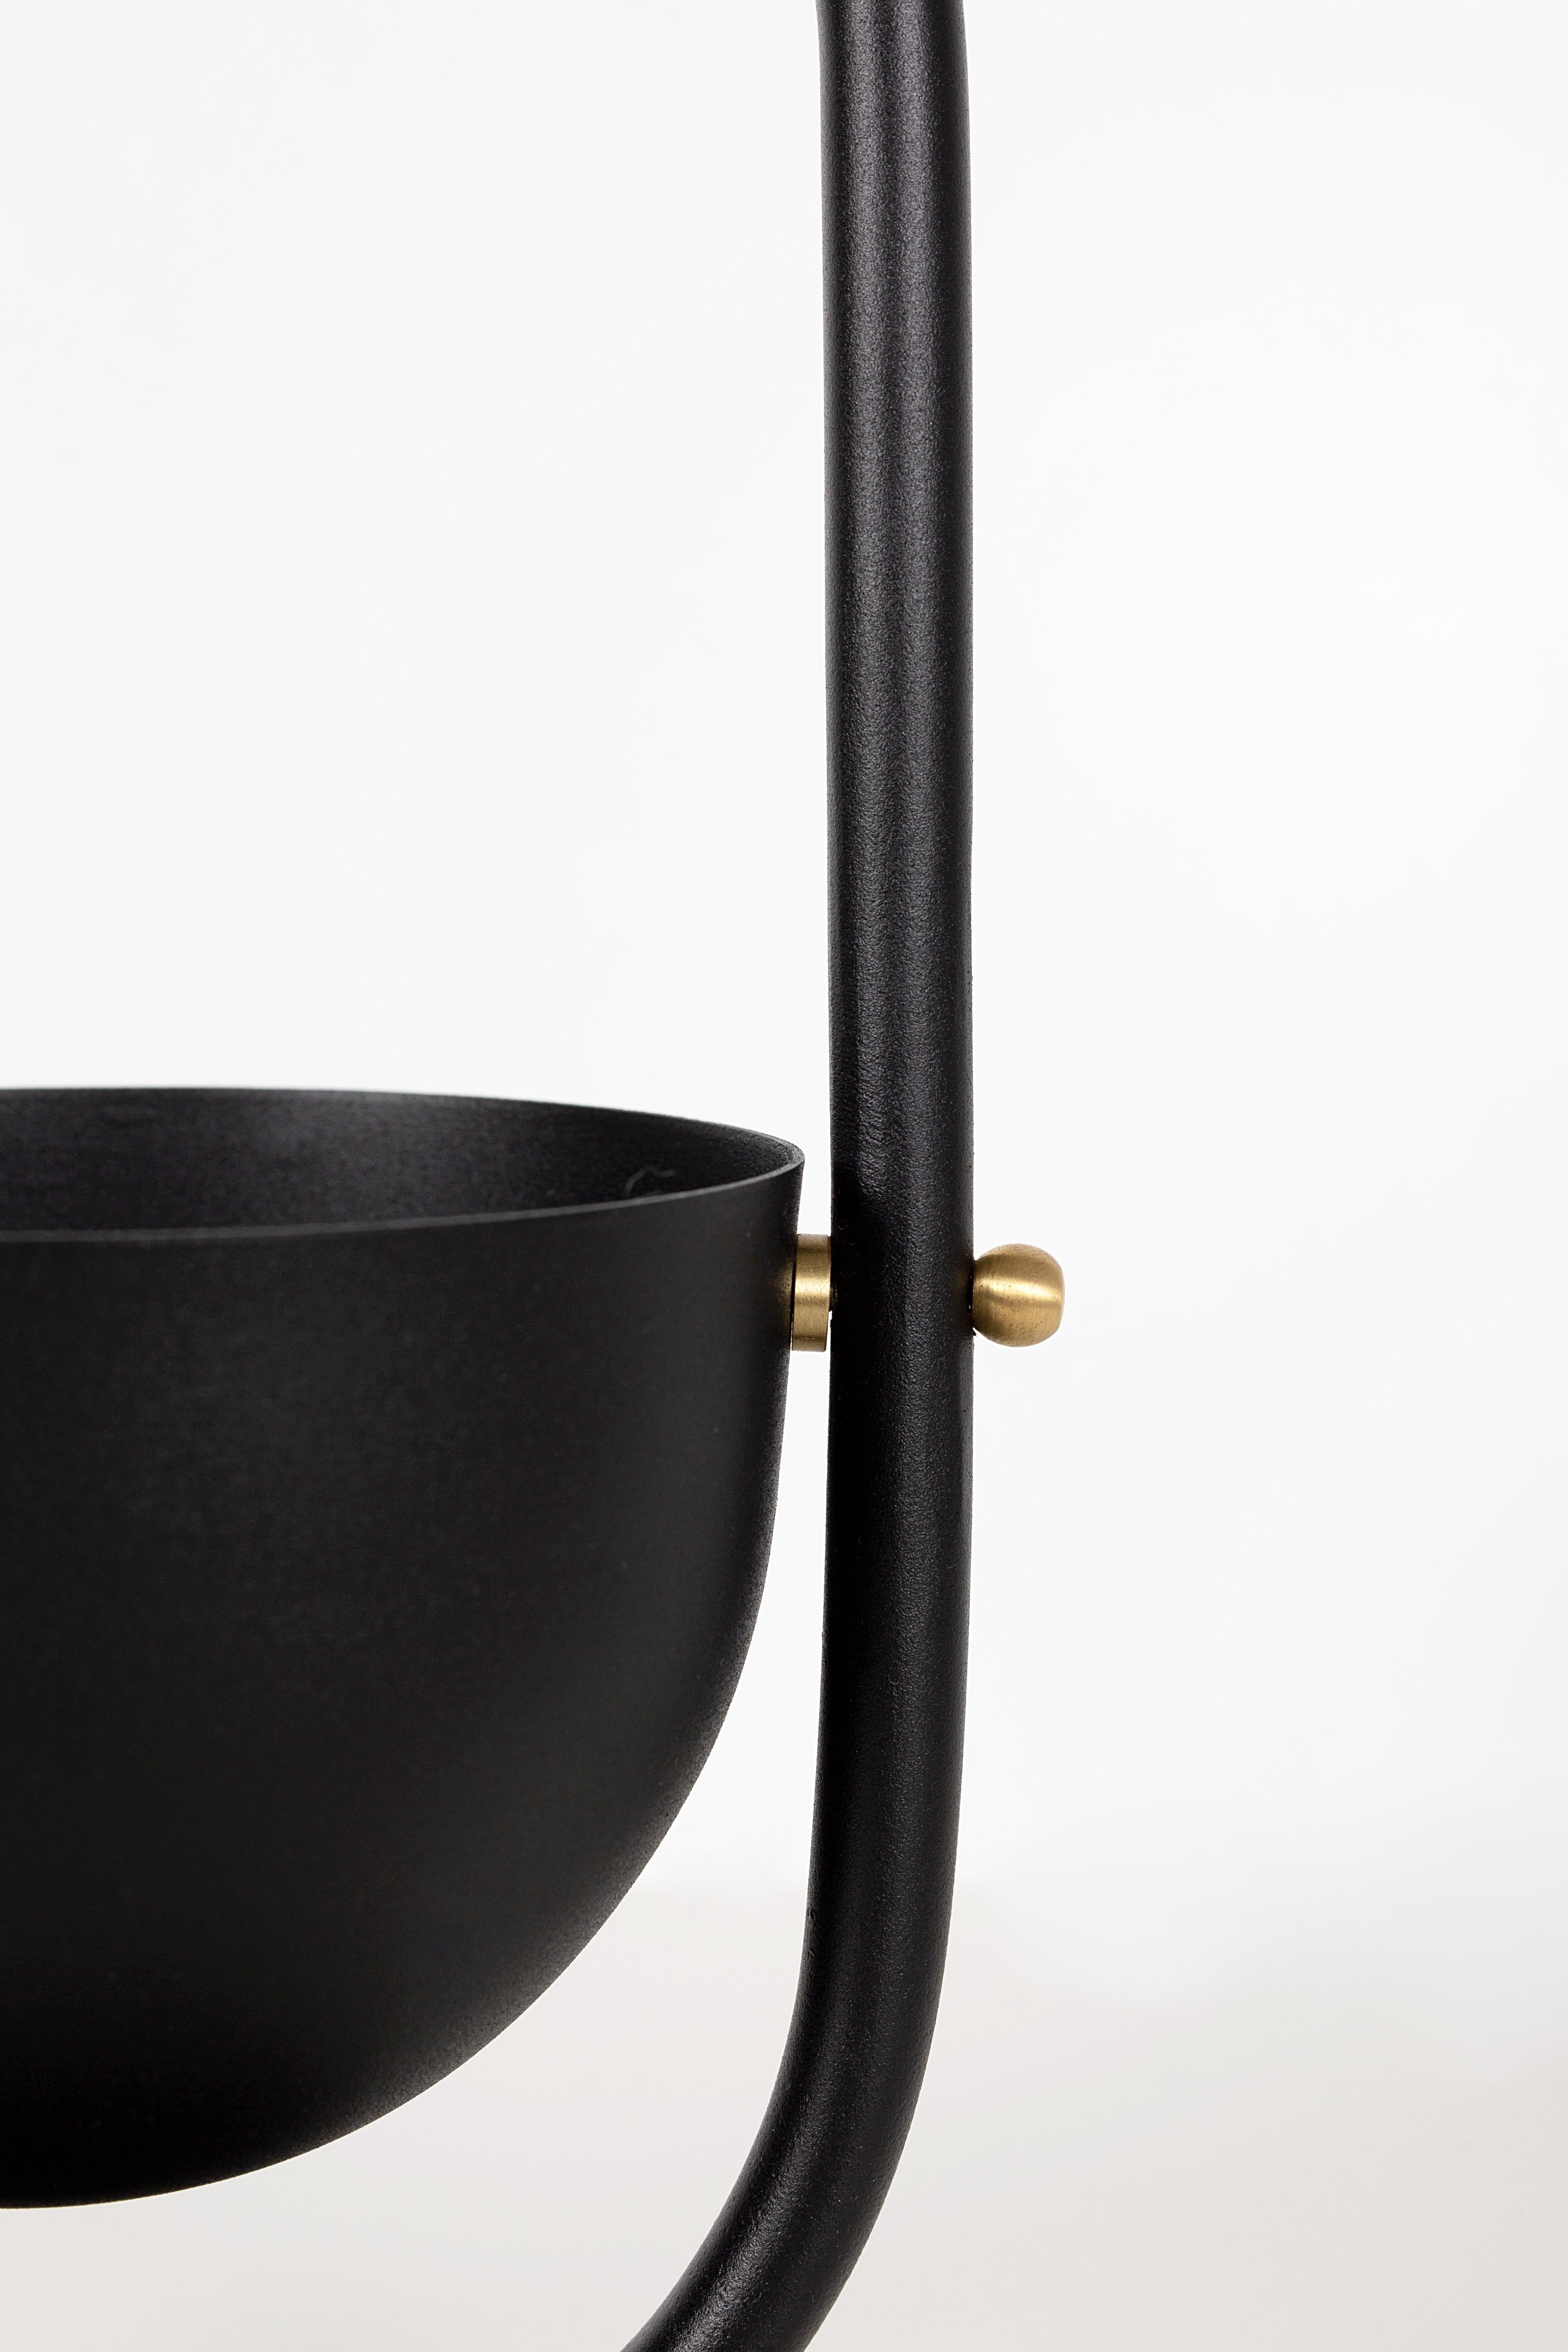 Sienna Bowl/Vase by Studio Laf For Sale 5